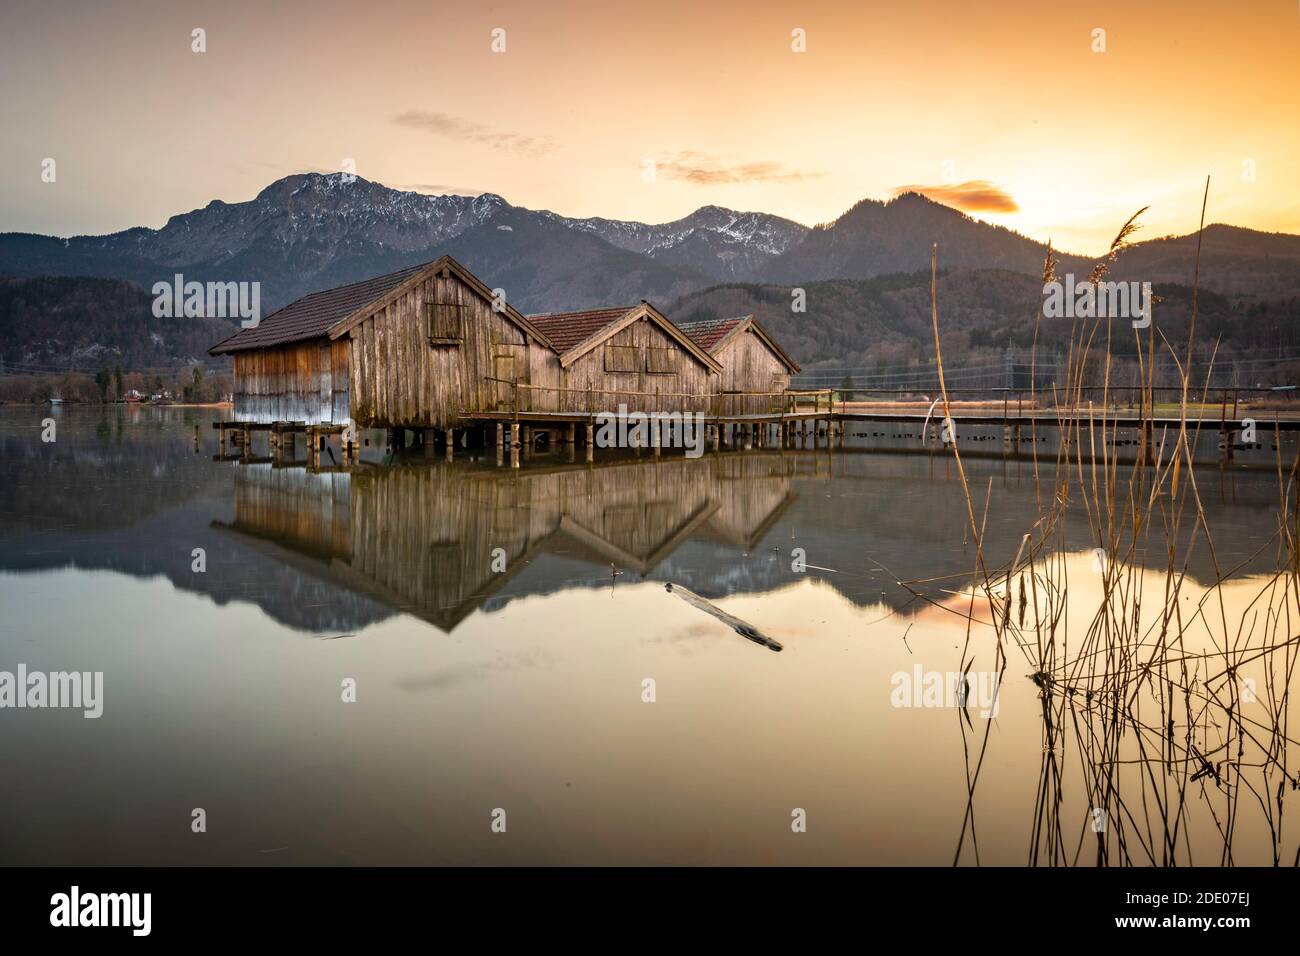 Boat houses on Lake Kochelsee at sunset. Stock Photo